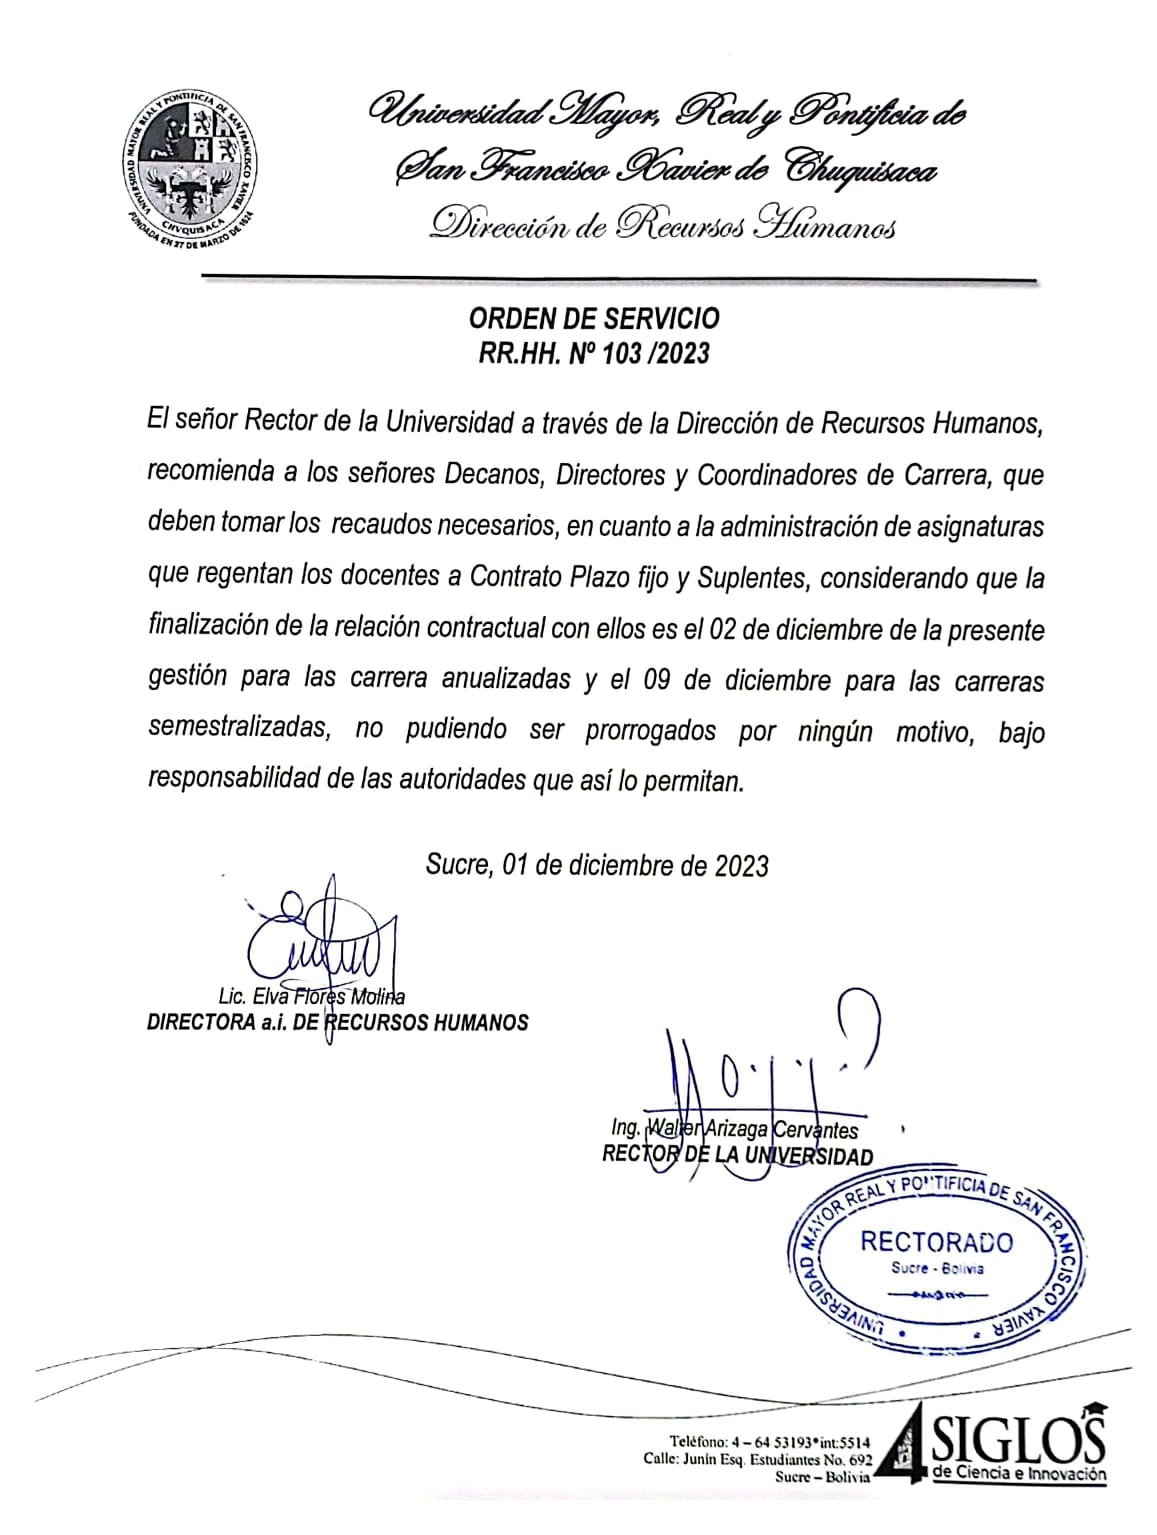 ORDEN DE SERVICIO RR.HH. Nº 103/2023, DOCENTES A CONTRATO Y SUPLENCIA.